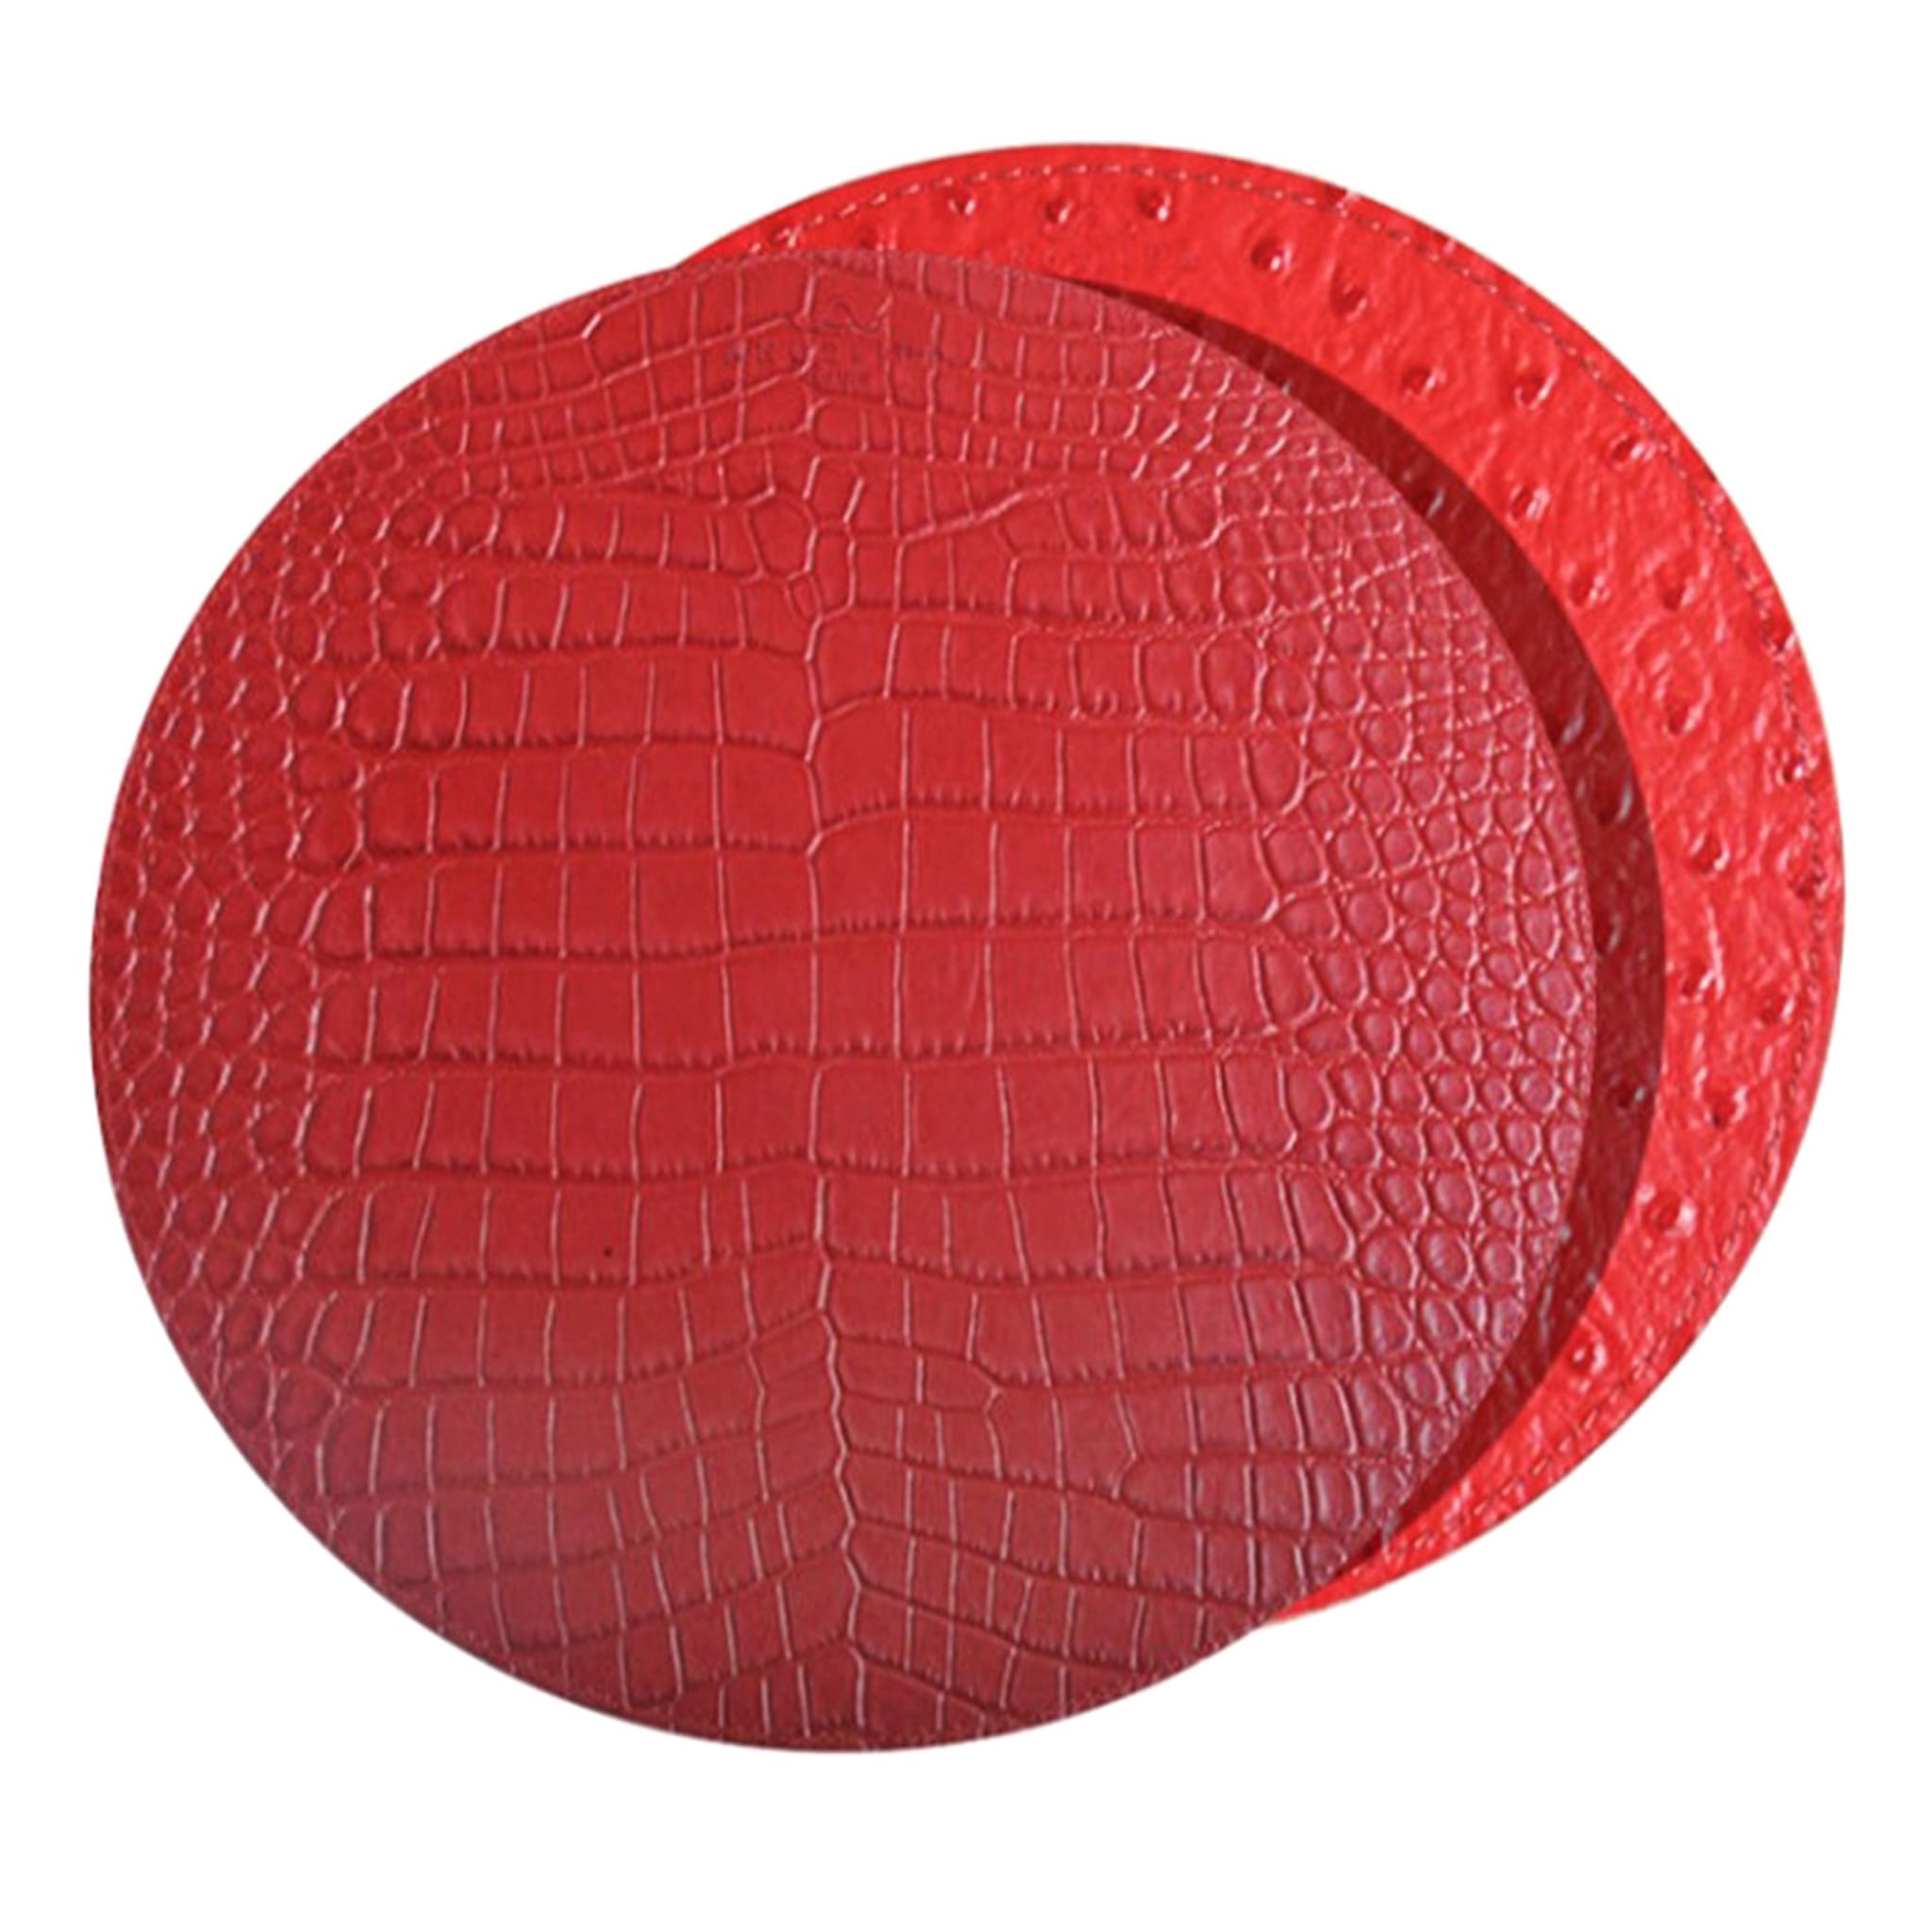 Kenya Medium Set of 2 Round Red Leather Placemats - Main view